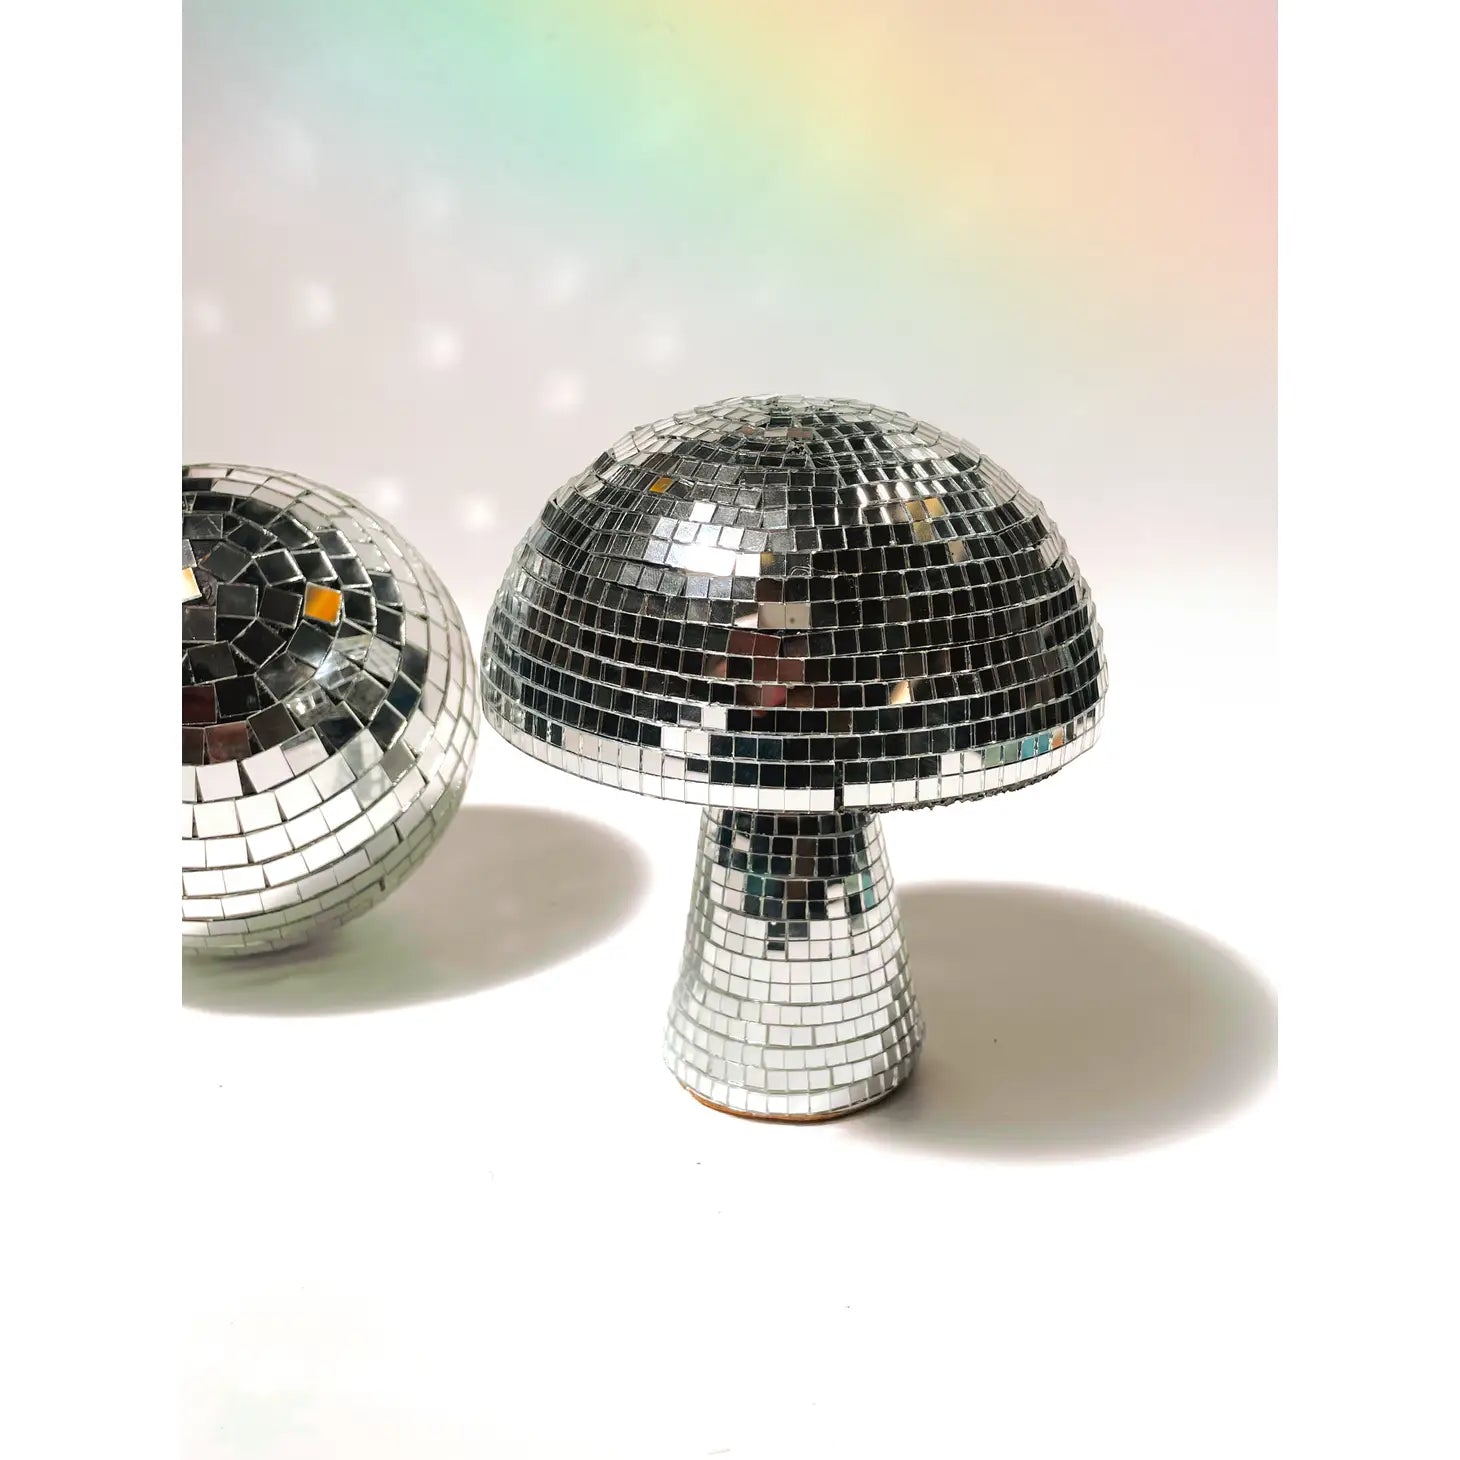 Disco Ball Mushrooms